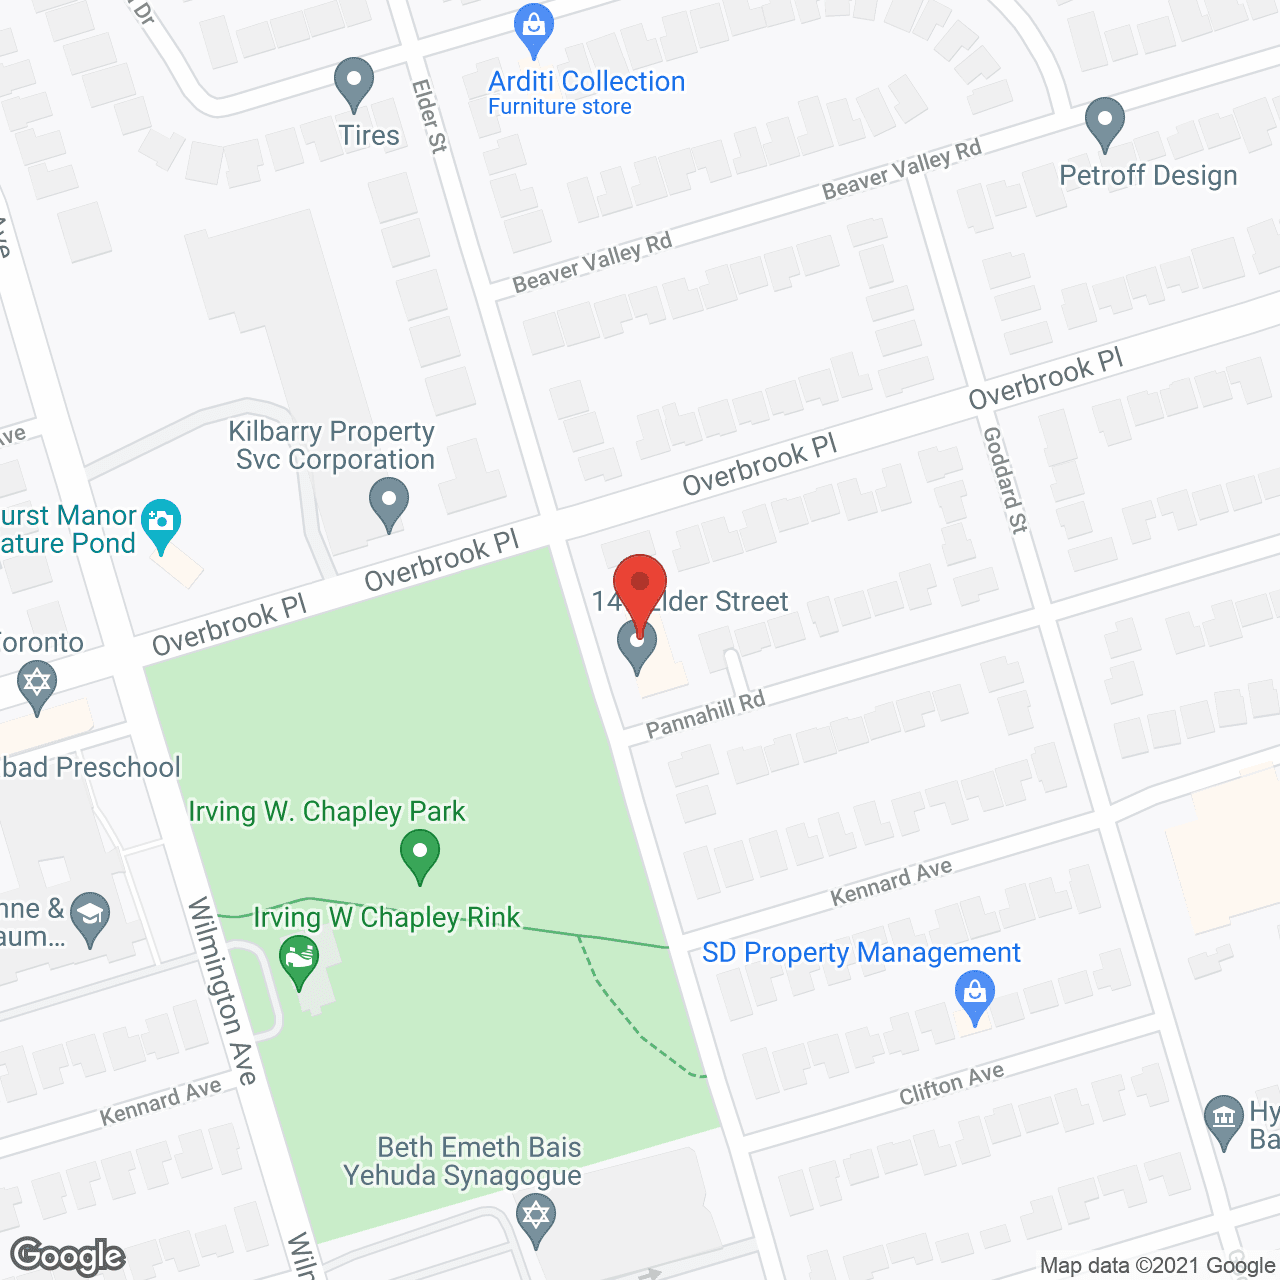 S147 Elder Street Inc in google map